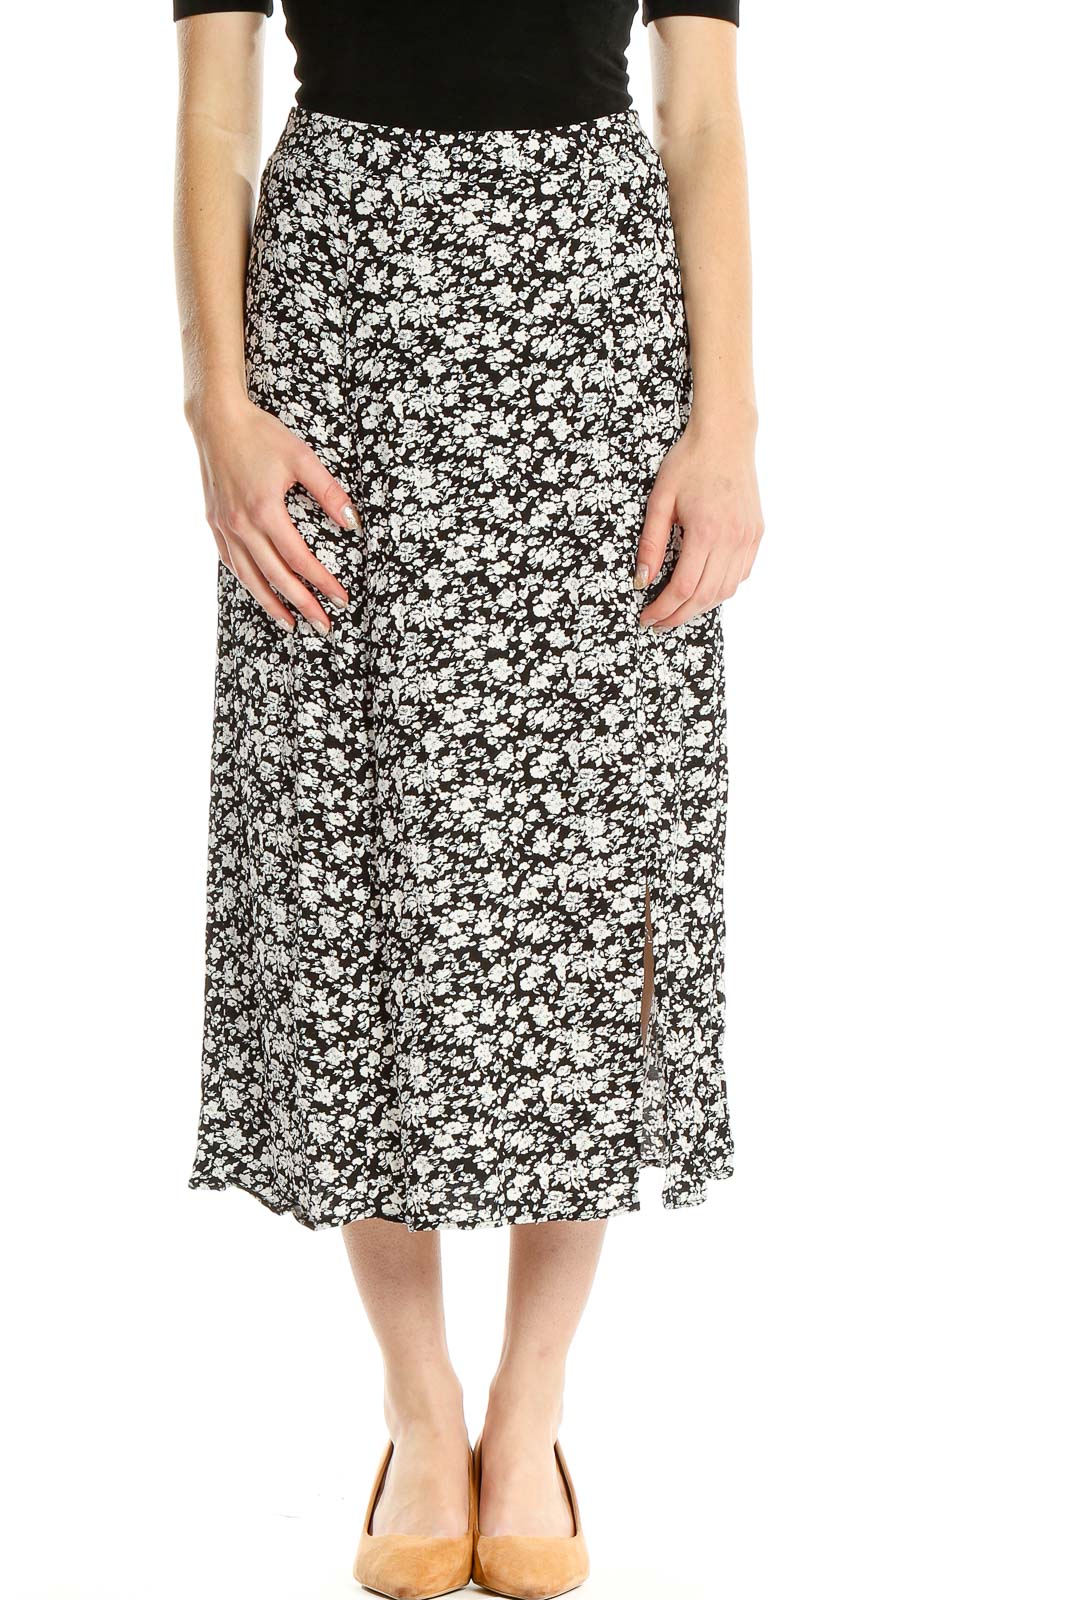 Amisu - White Floral Print Casual Straight Skirt | SilkRoll